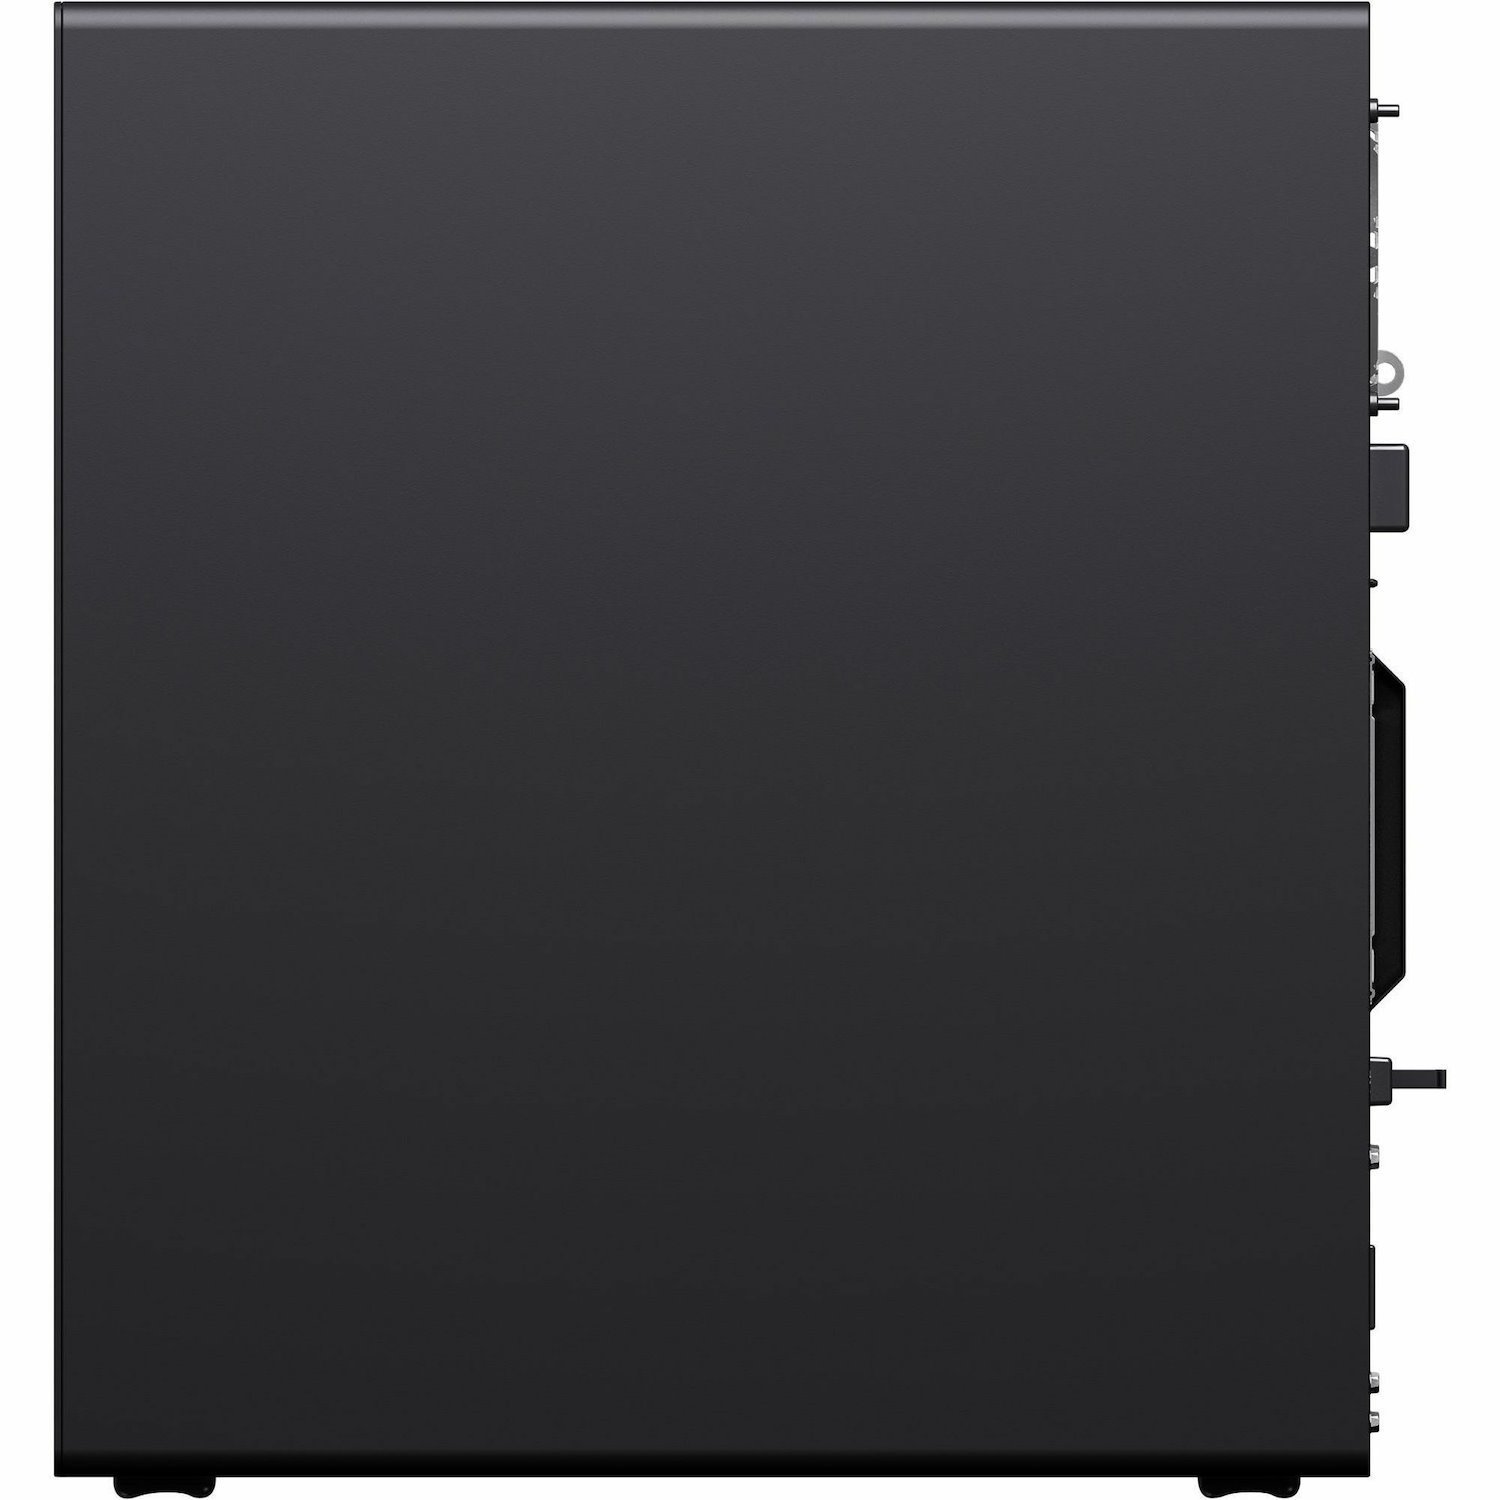 Lenovo ThinkStation P3 30GS0064US Workstation - 1 x Intel Core i7 13th Gen i5-13600K - 32 GB - 1 TB SSD - Tower